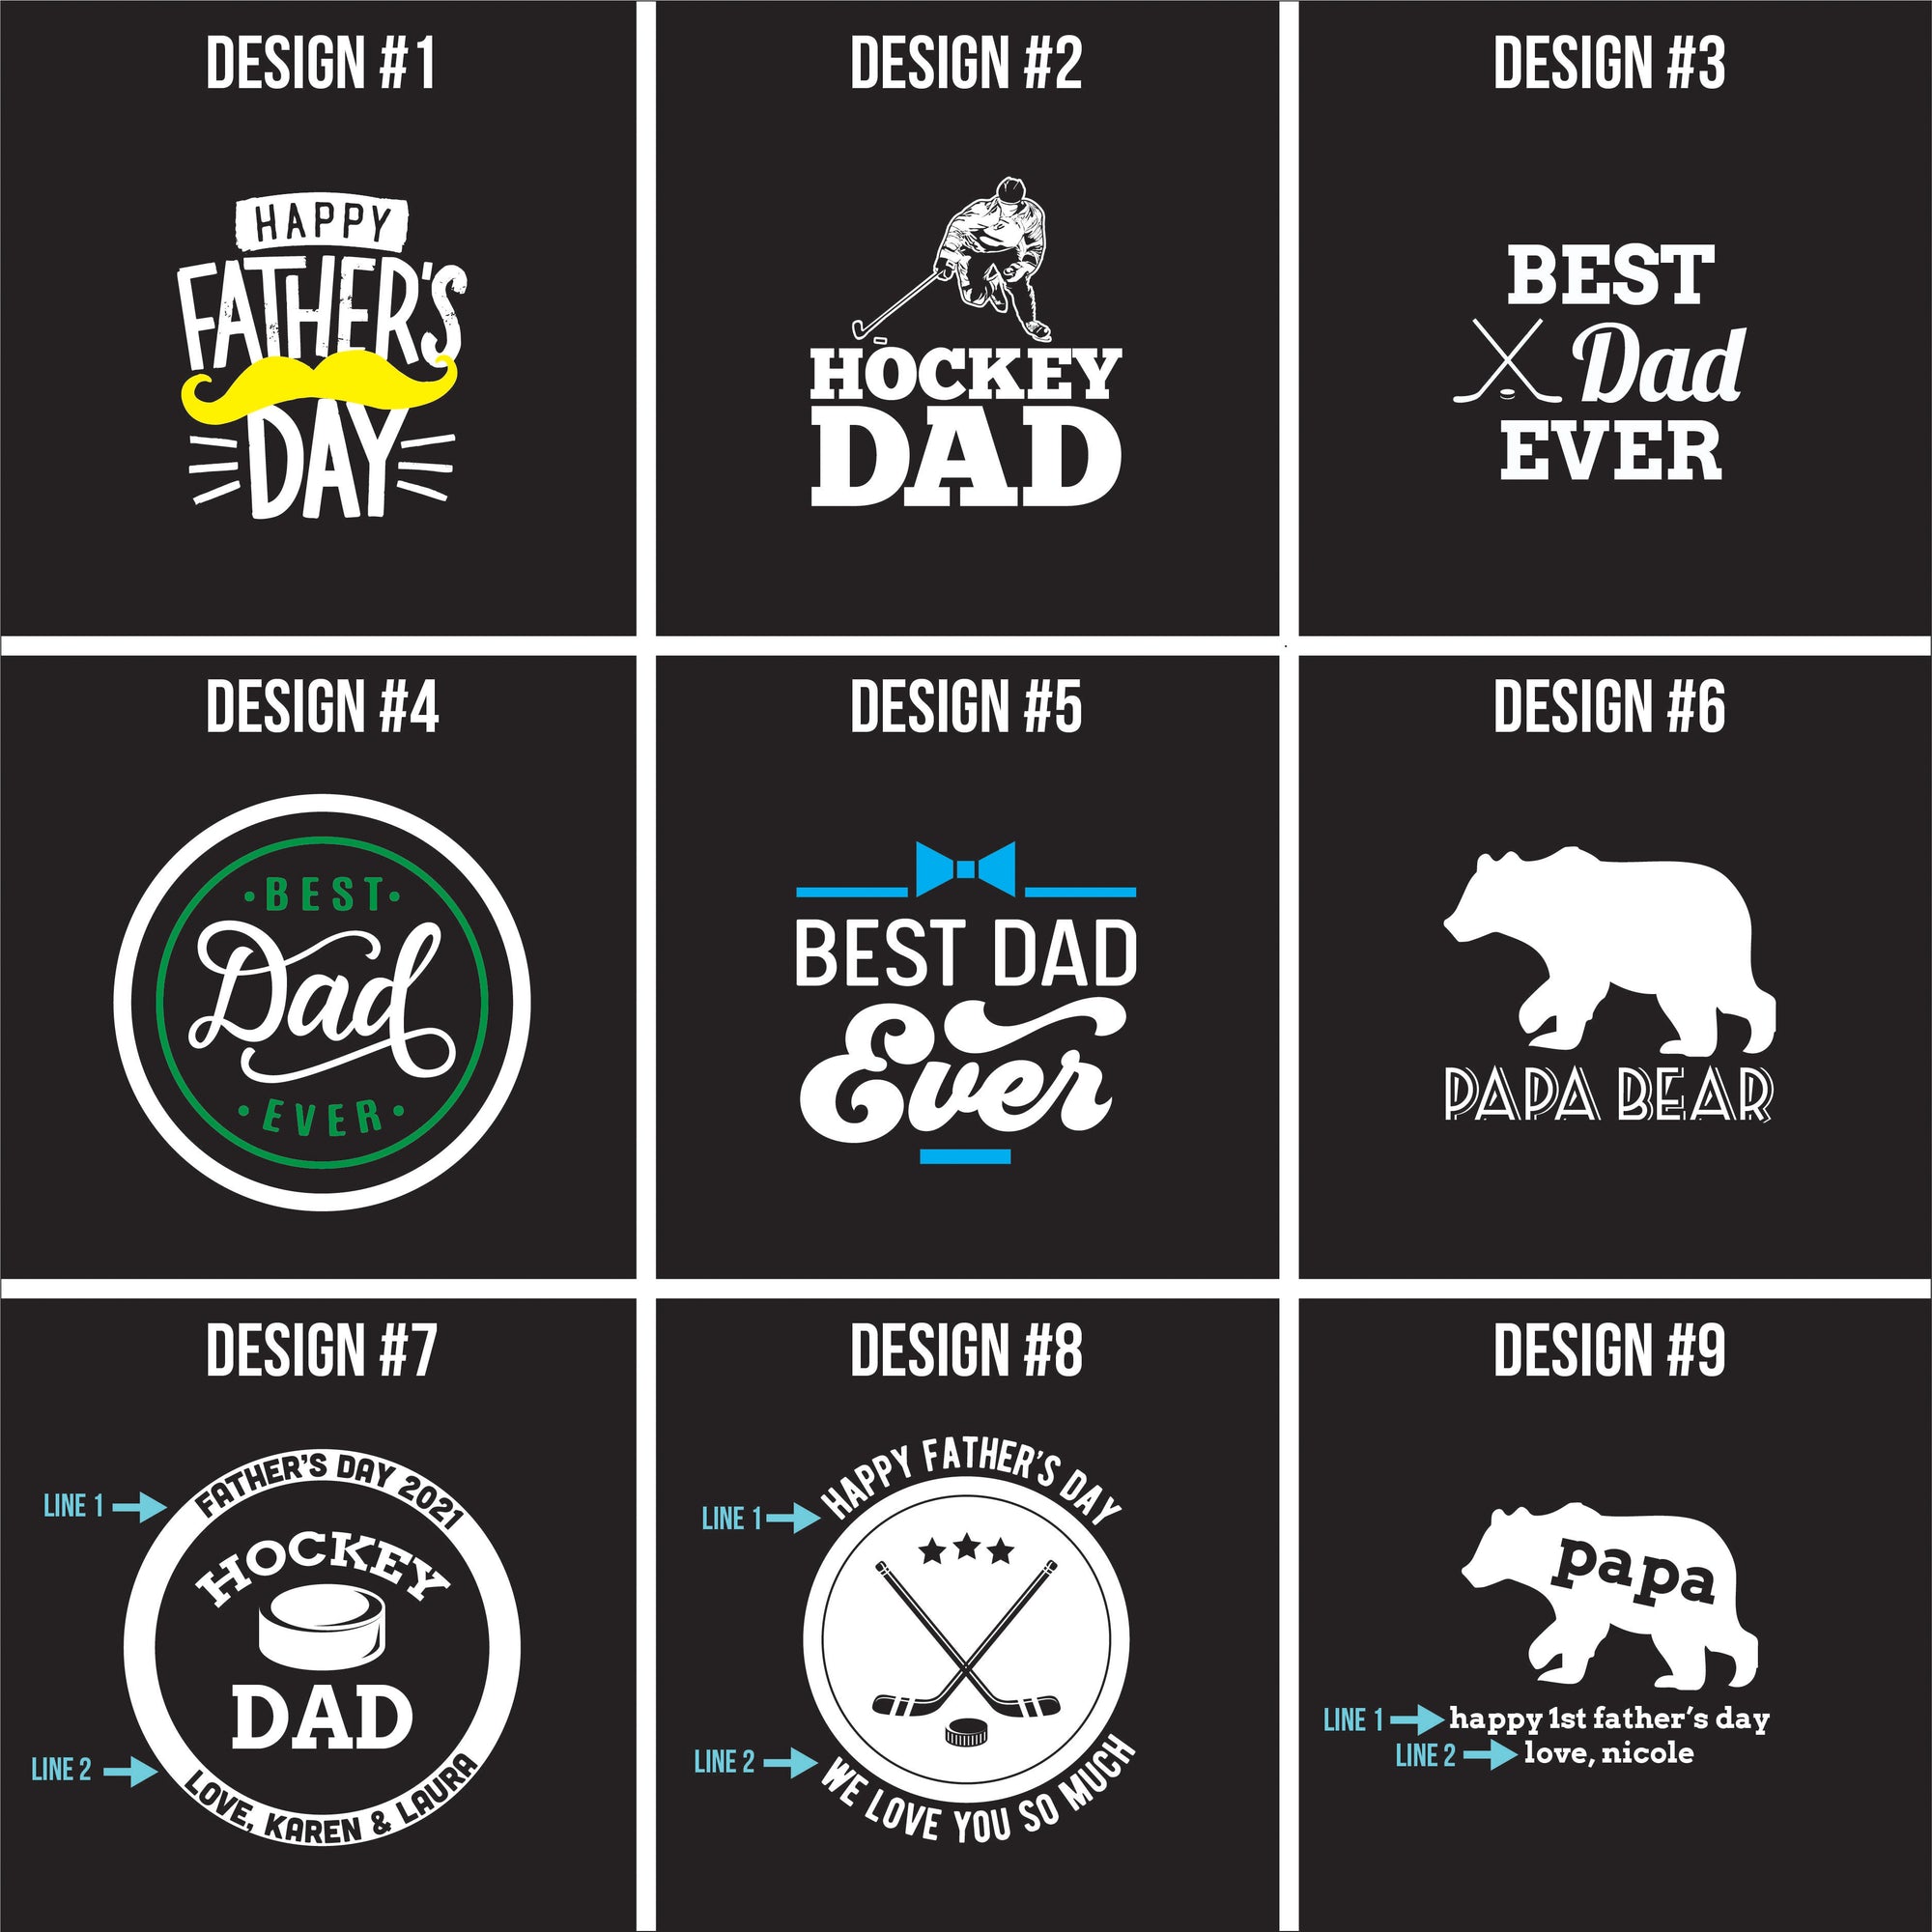 Father's Day Design Grid, Design 1-9